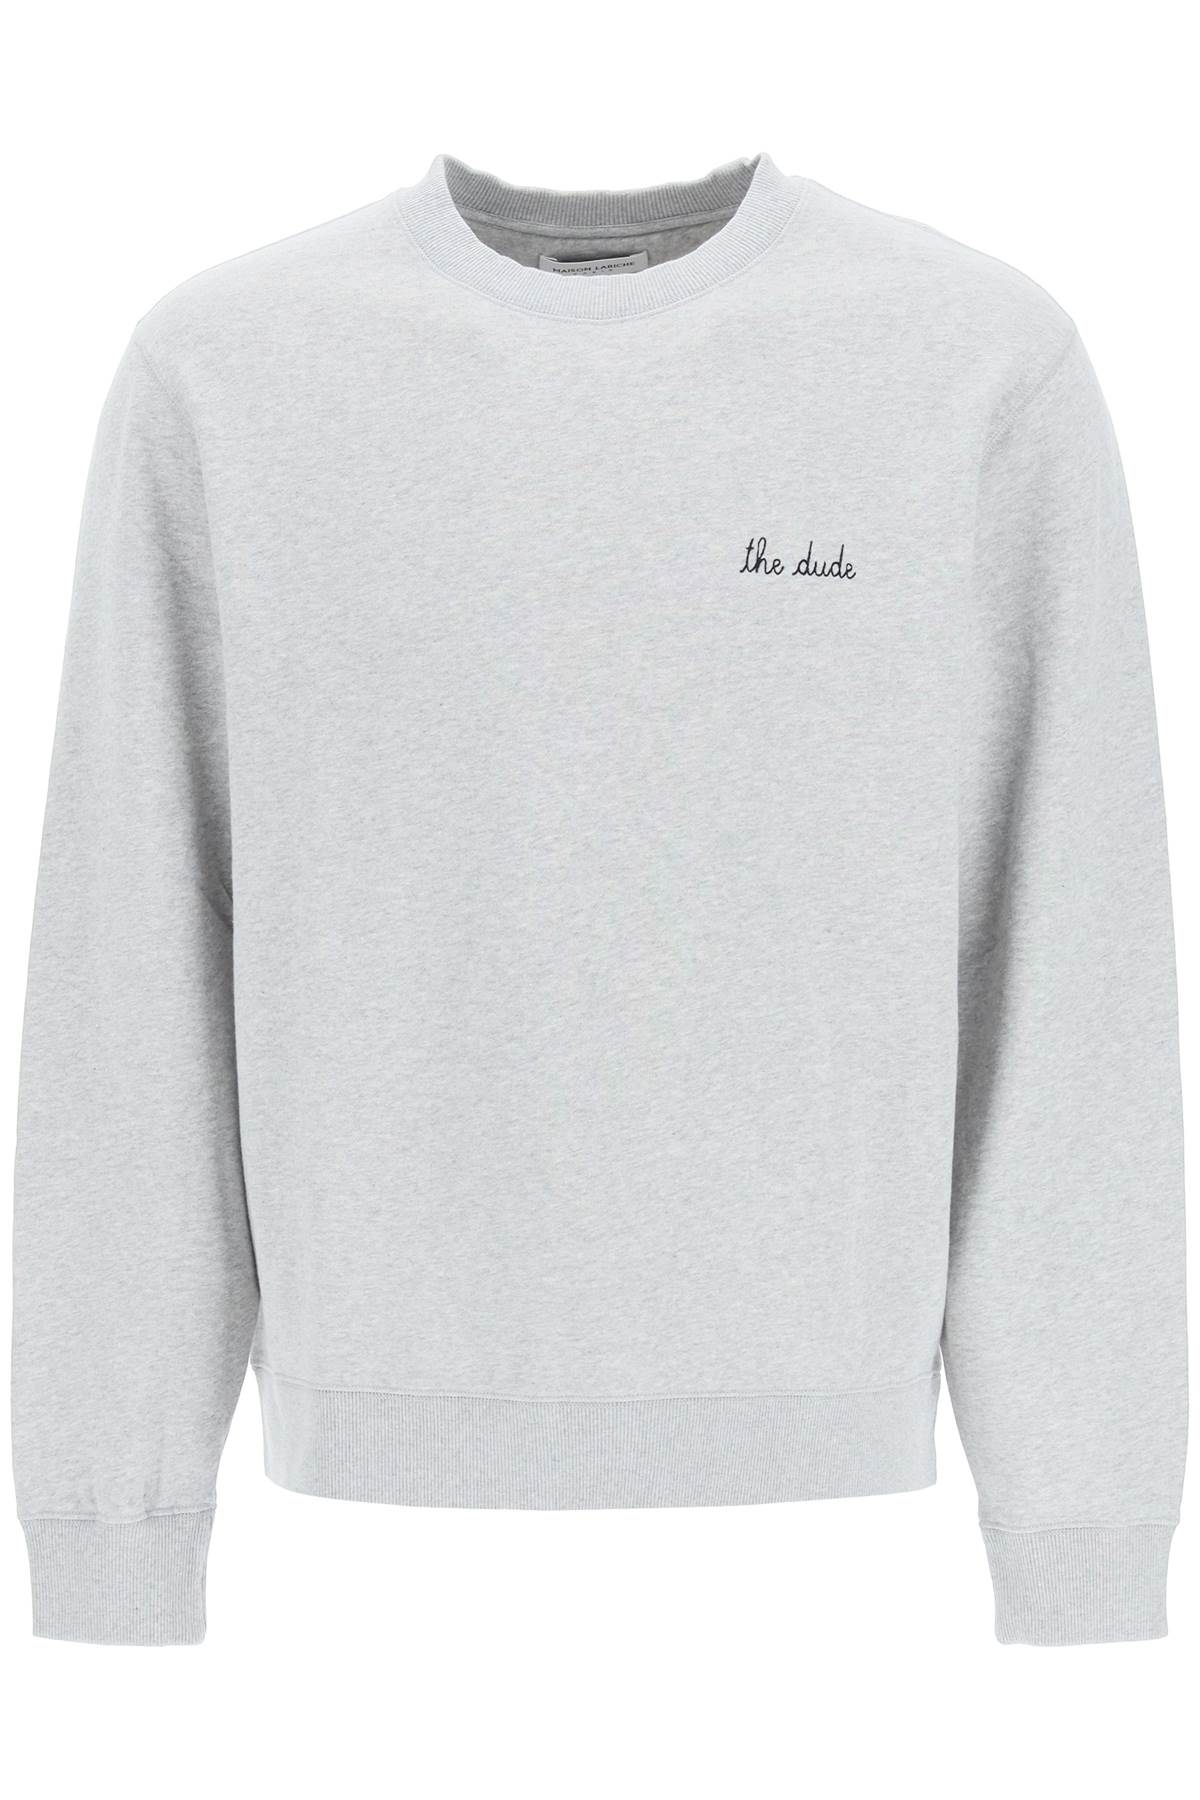 Maison Labiche the Dude Charonne Sweatshirt